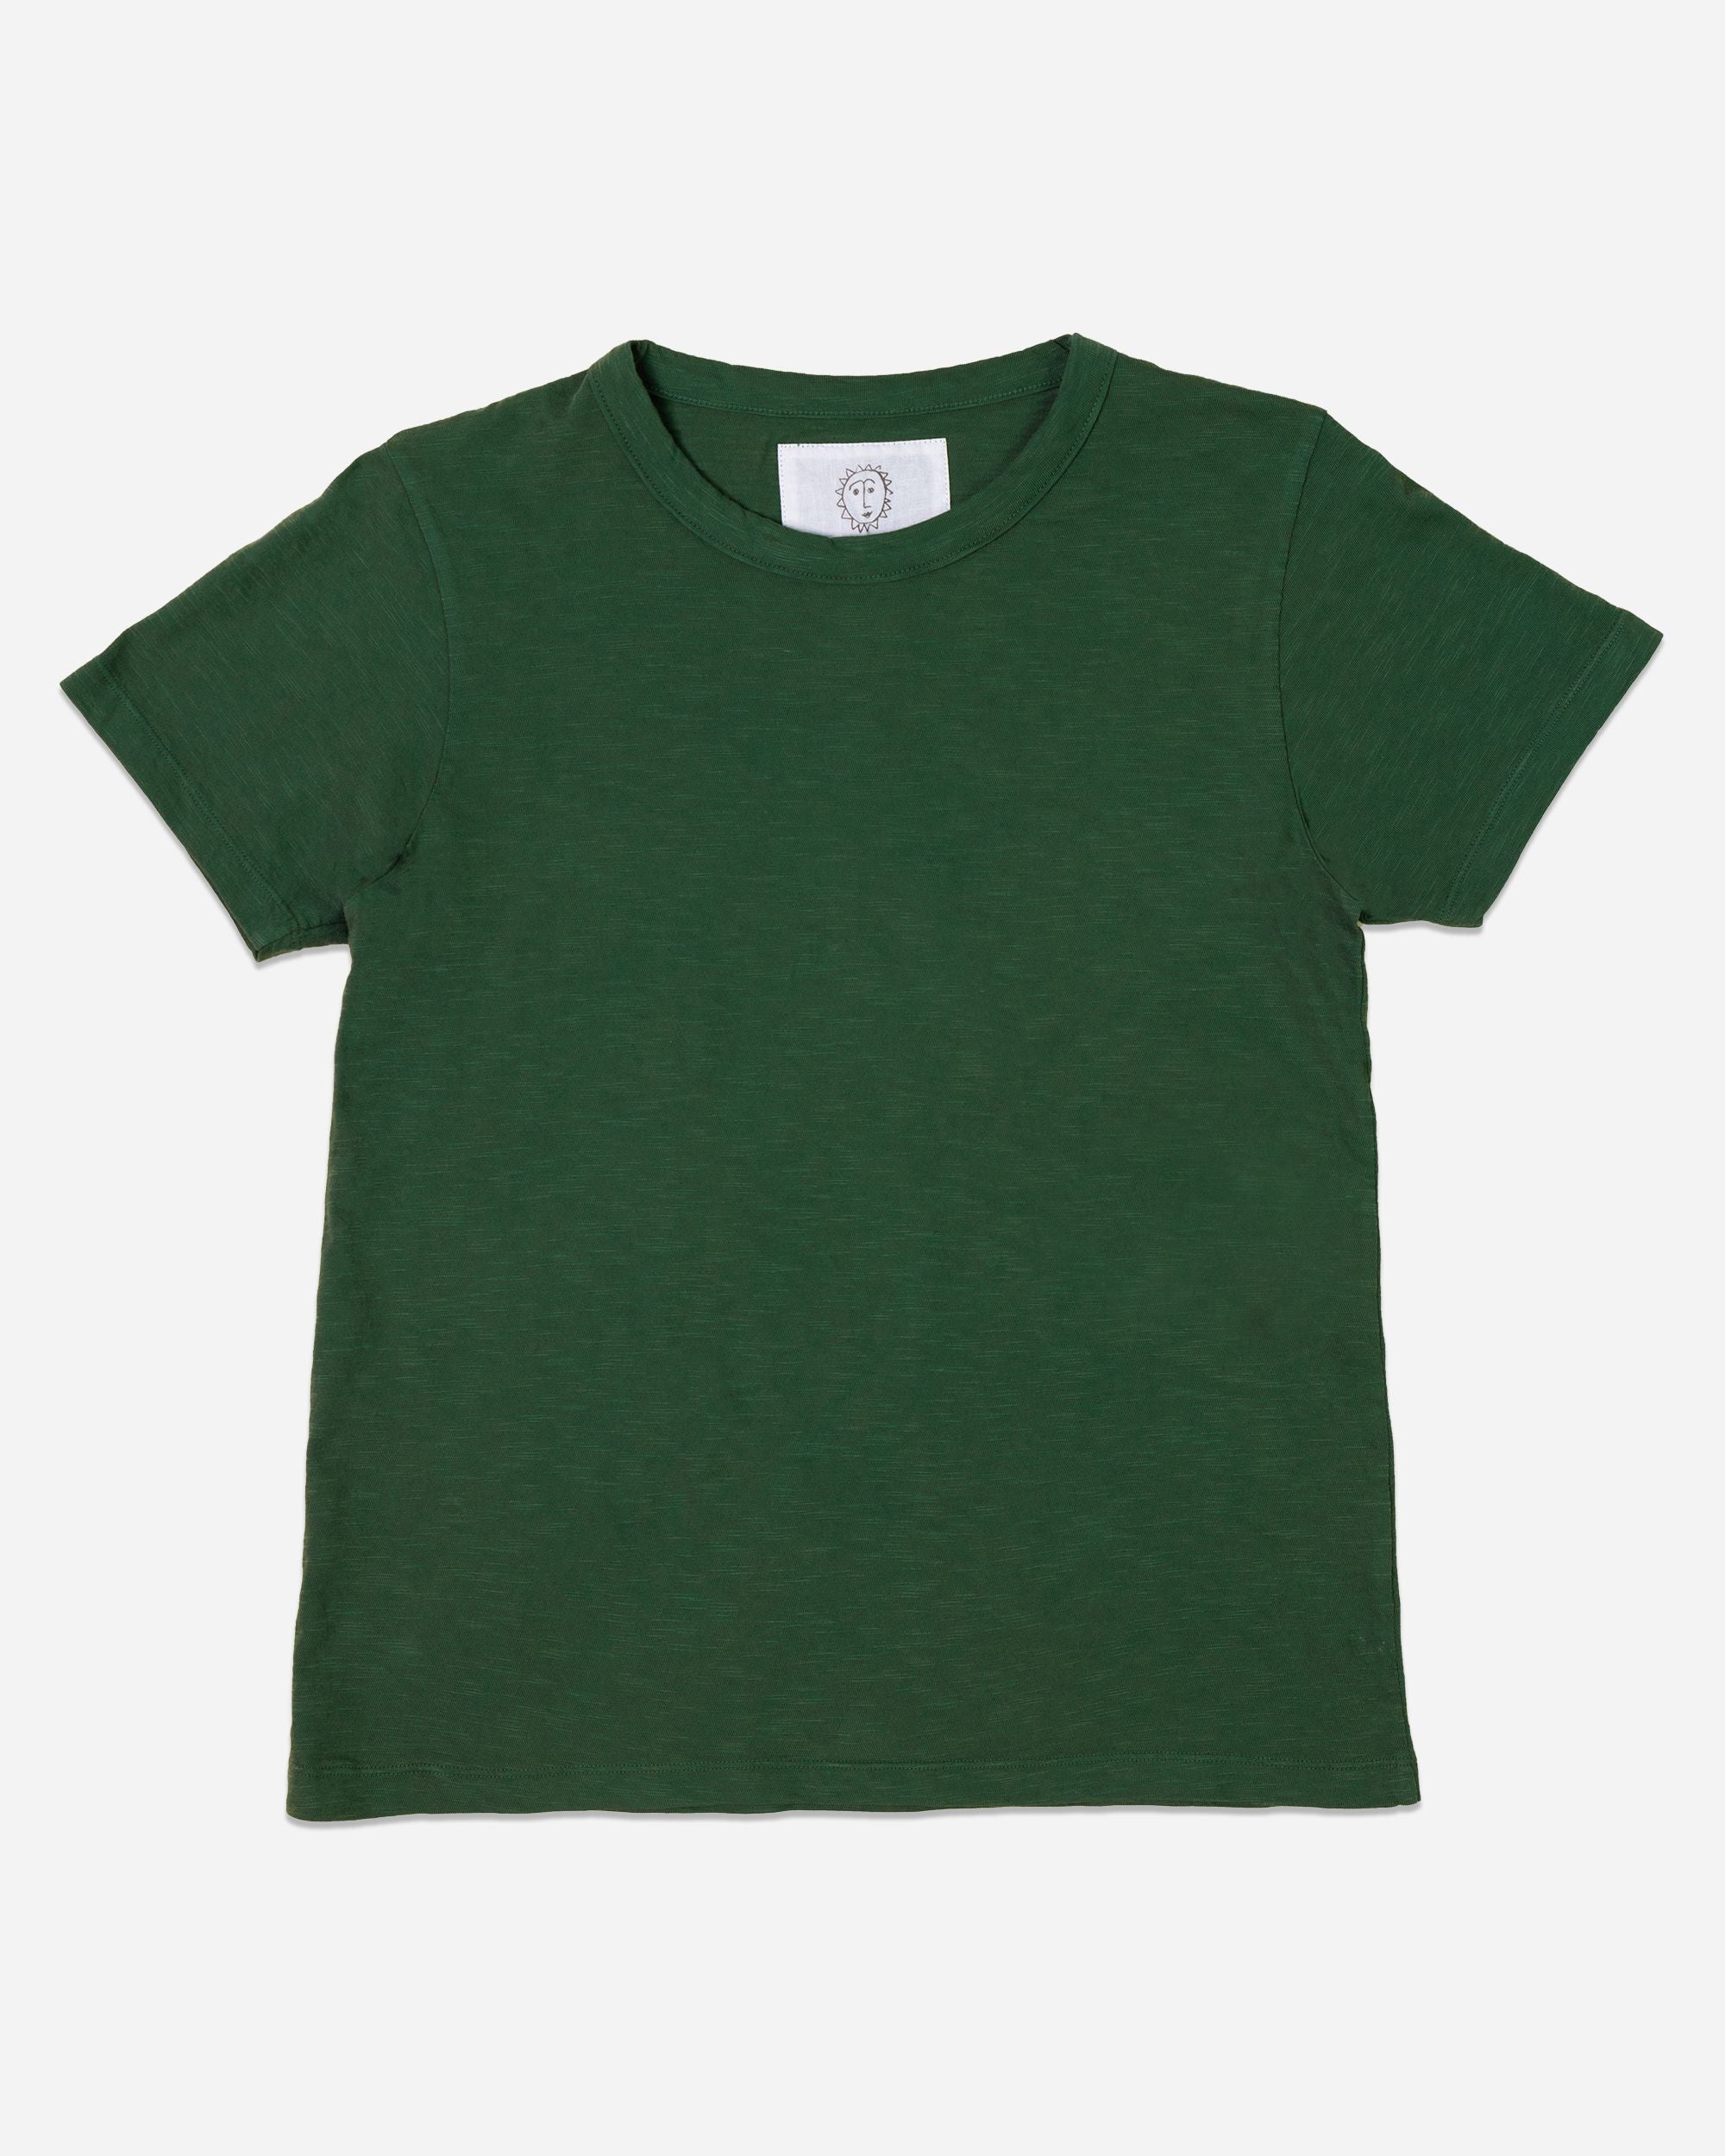 Saturday Tee - Knit T-Shirt - Basil - Printfresh